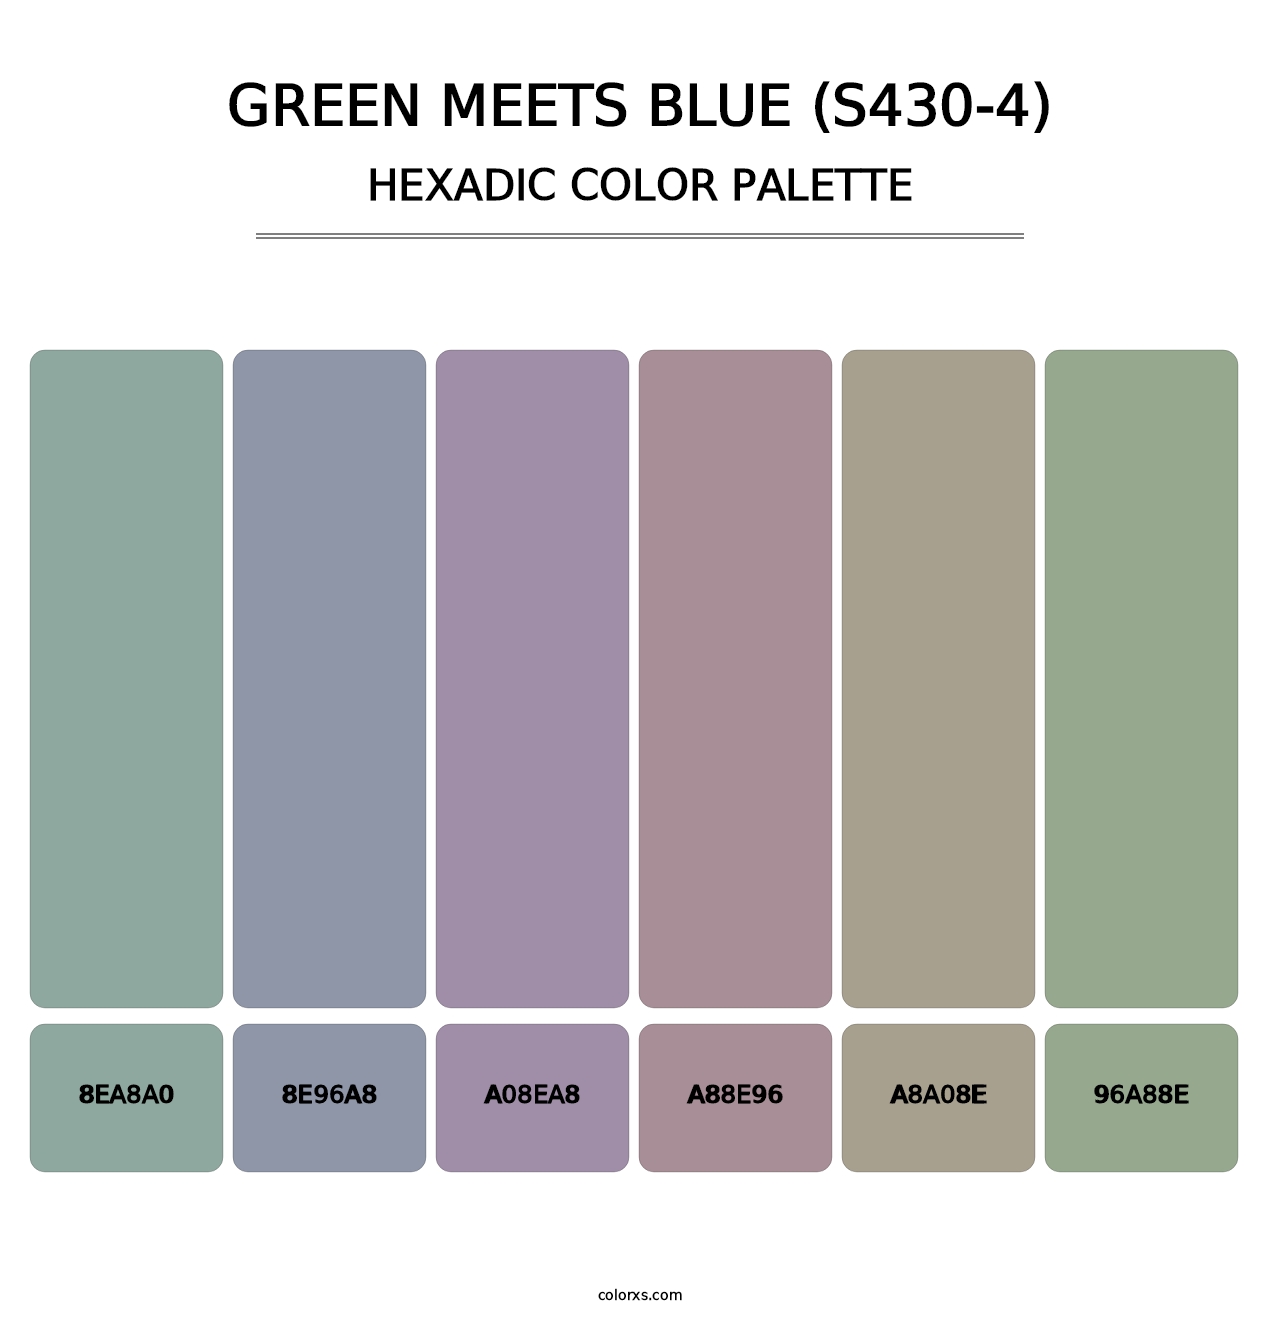 Green Meets Blue (S430-4) - Hexadic Color Palette